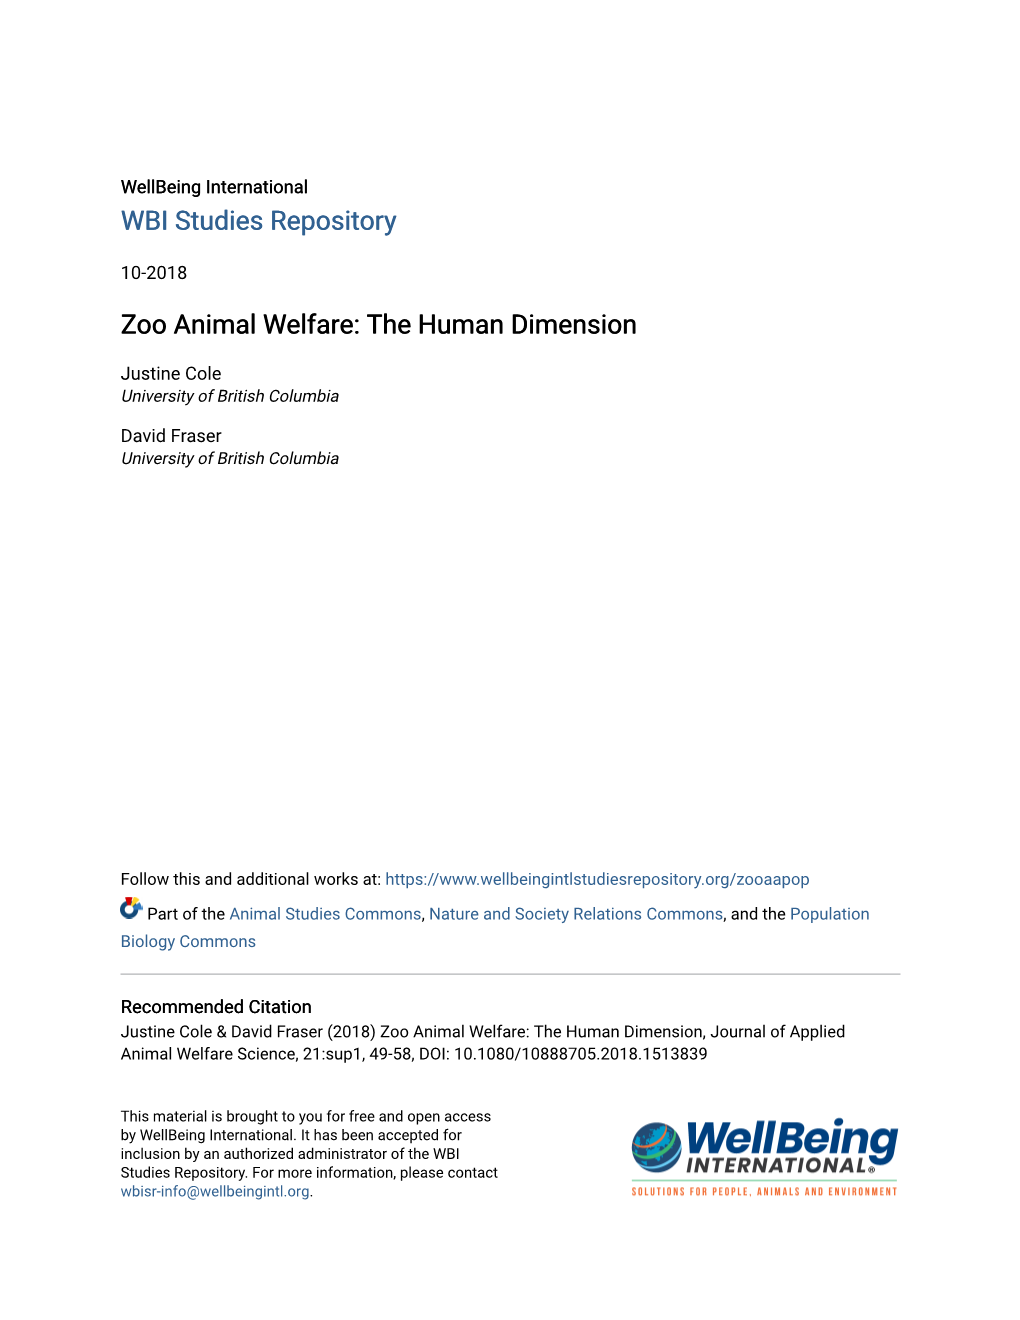 Zoo Animal Welfare: the Human Dimension